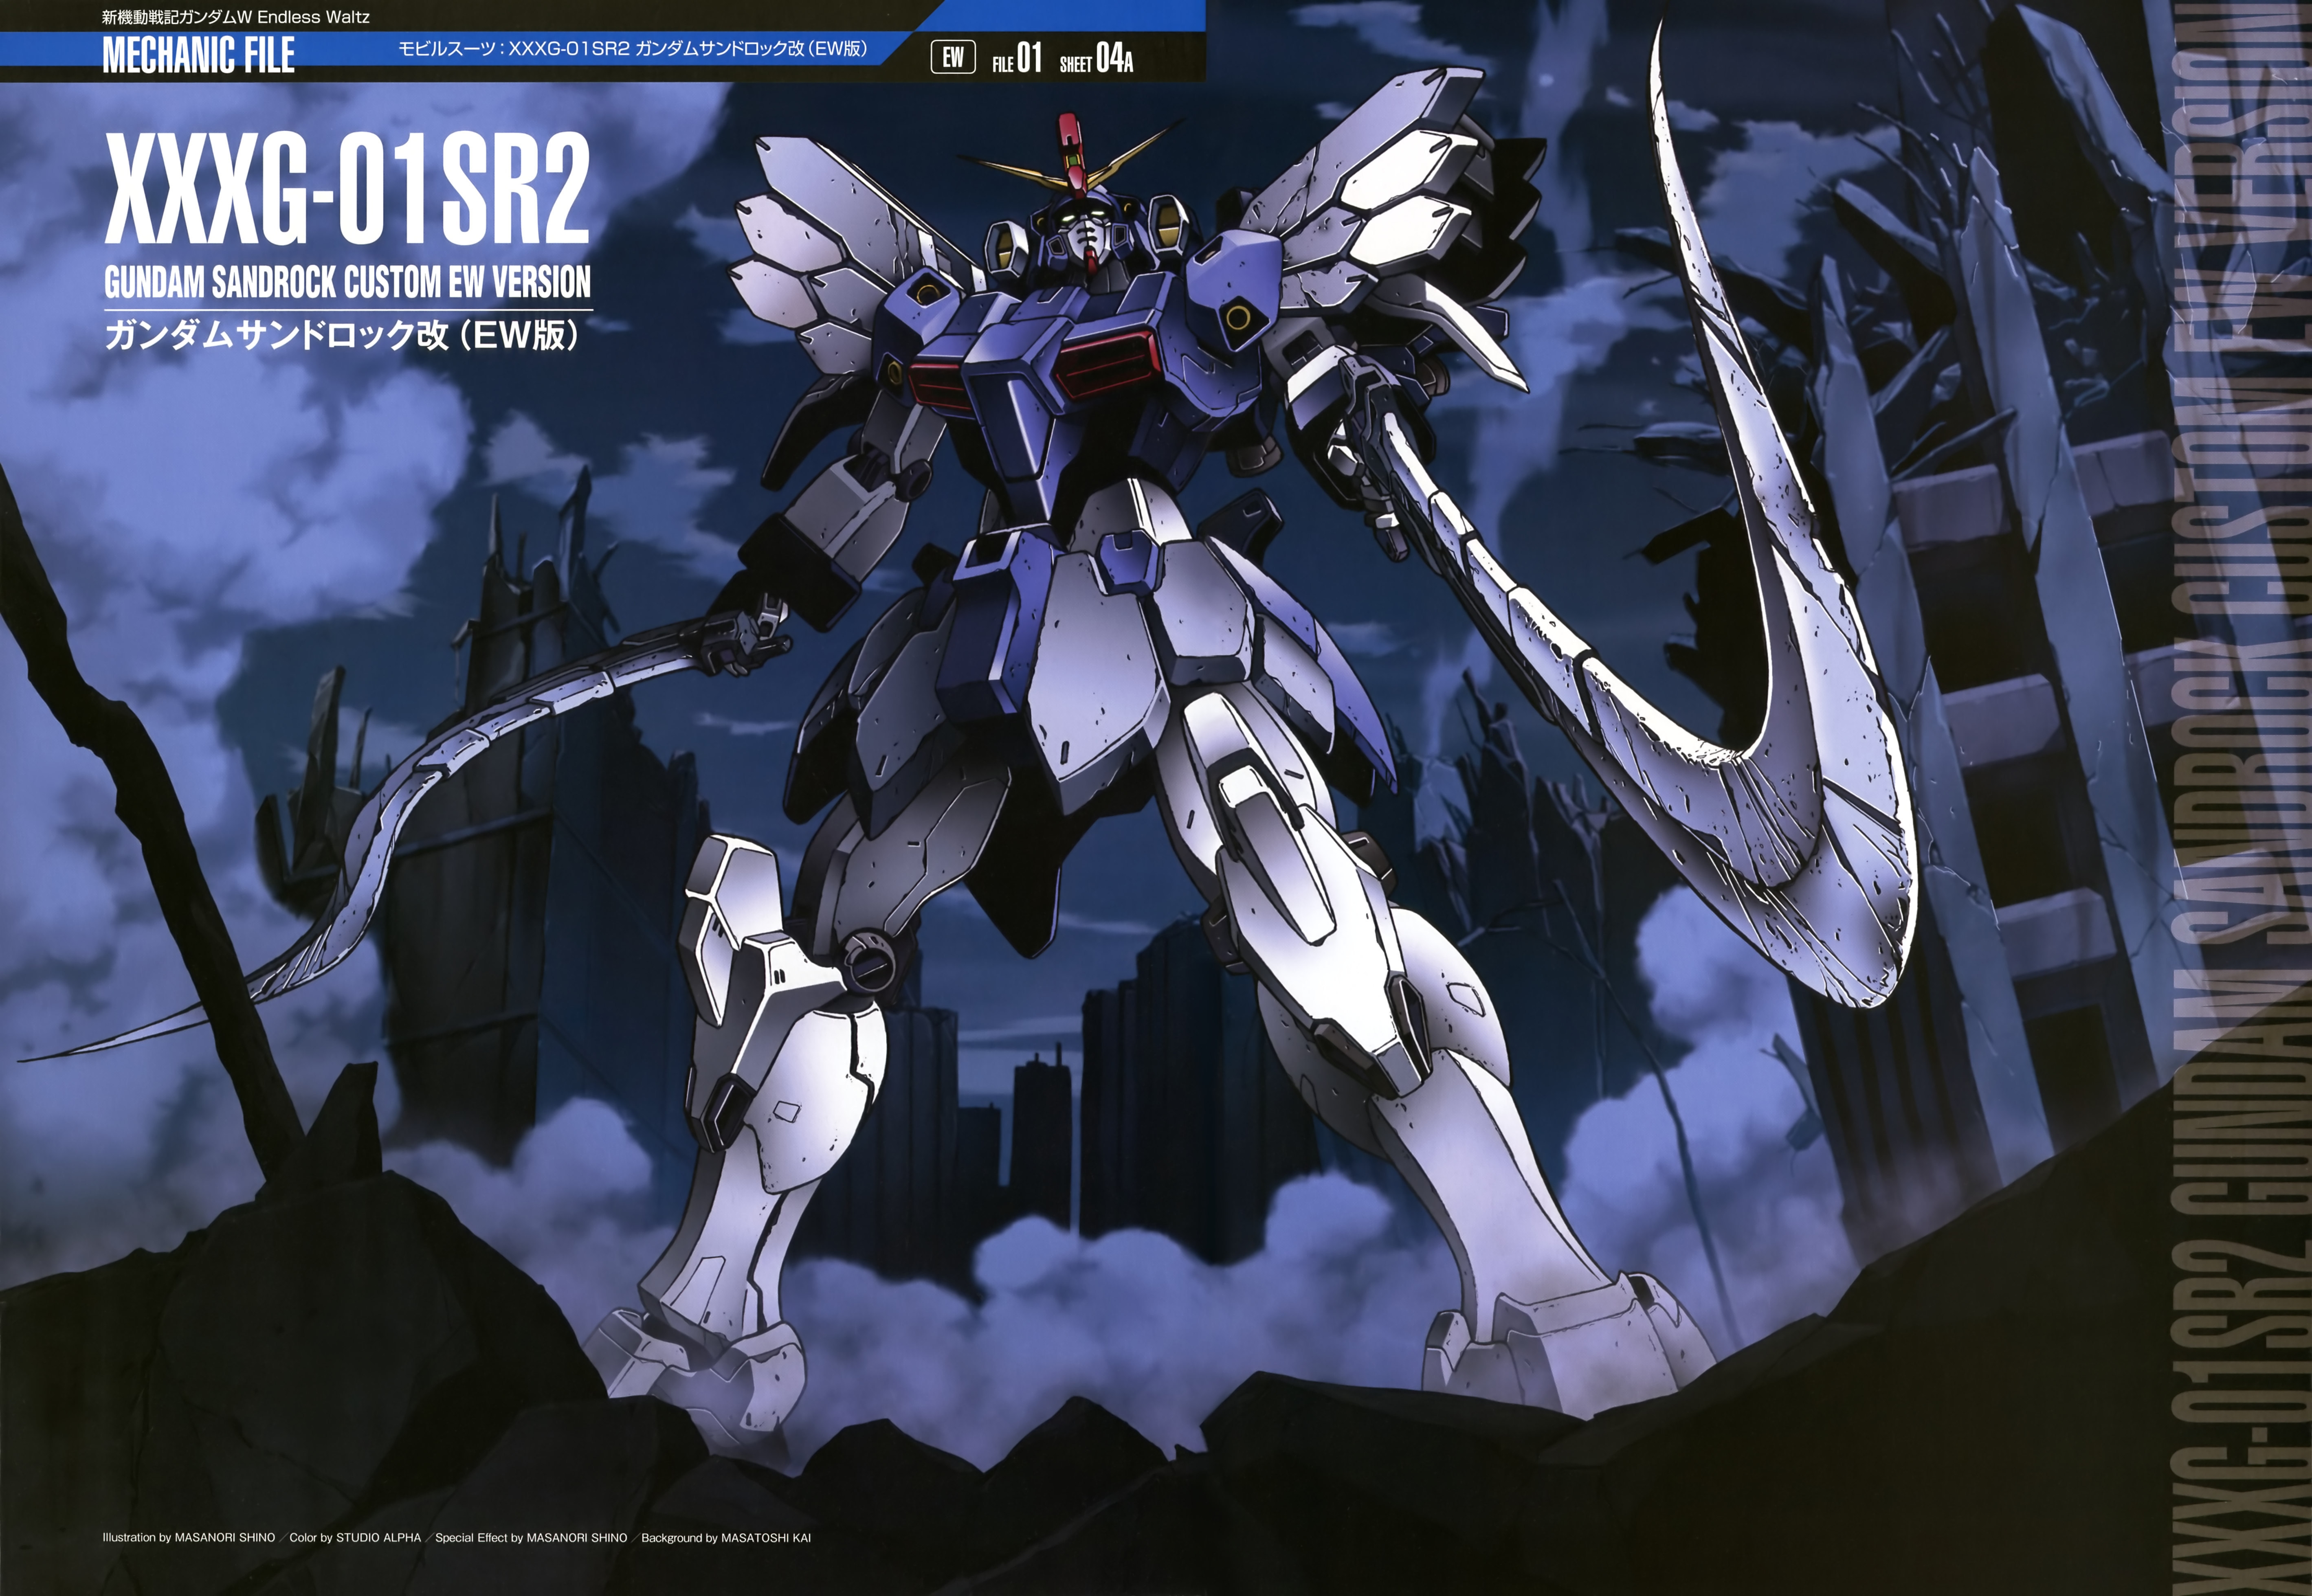 Anime 5676x3919 anime Gundam mechs Super Robot Taisen Mobile Suit Gundam Wing Gundam Sandrock Custom artwork digital art